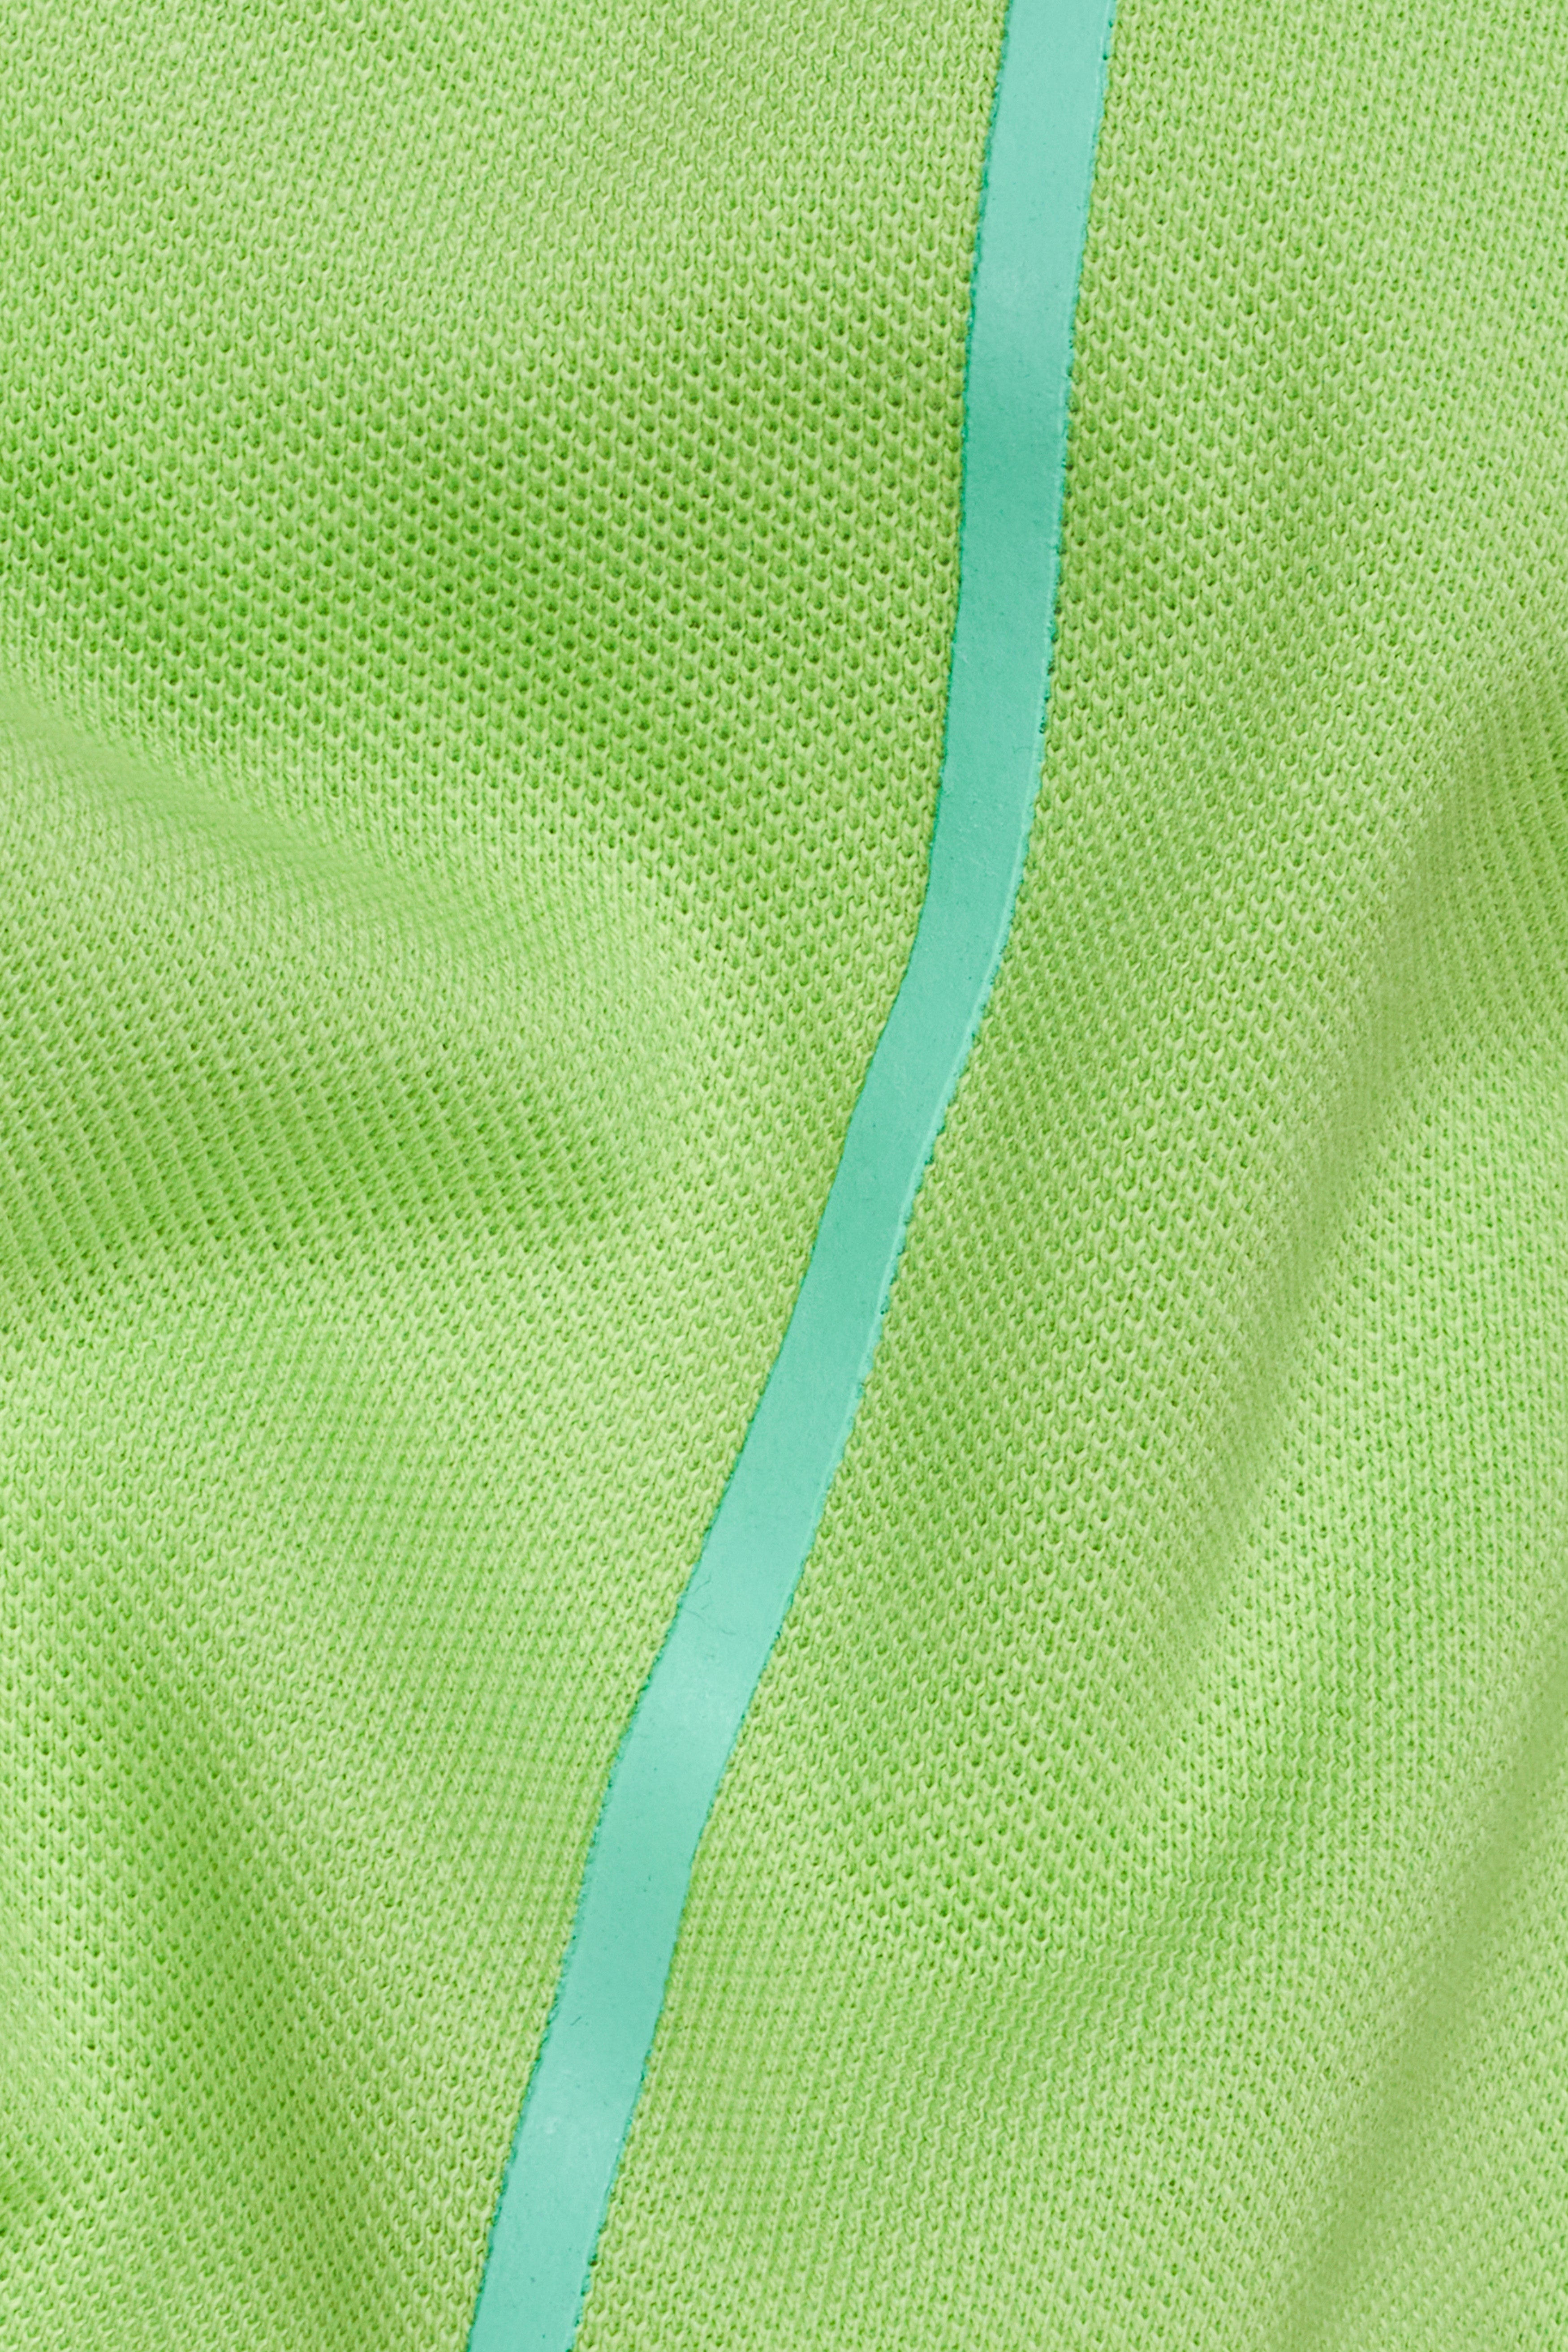 Pistachio Green Premium Cotton Pique T-shirt TS947-S, TS947-M, TS947-L, TS947-XL, TS947-XXL